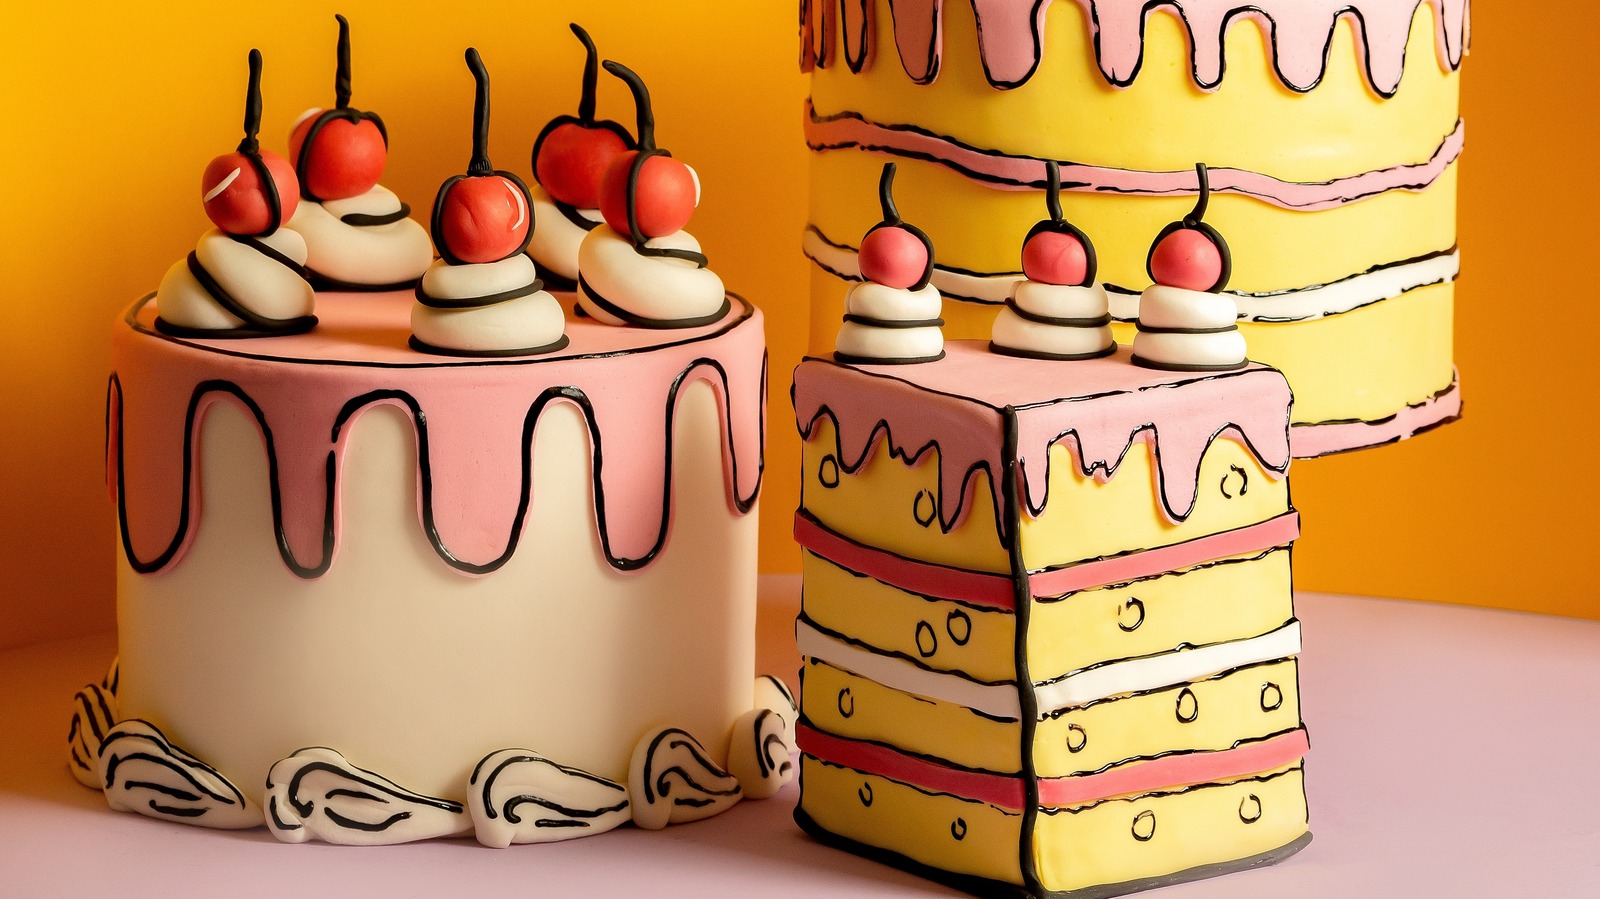 Animated Chocolate Cake Work Anniversary Design GIF | GIFDB.com